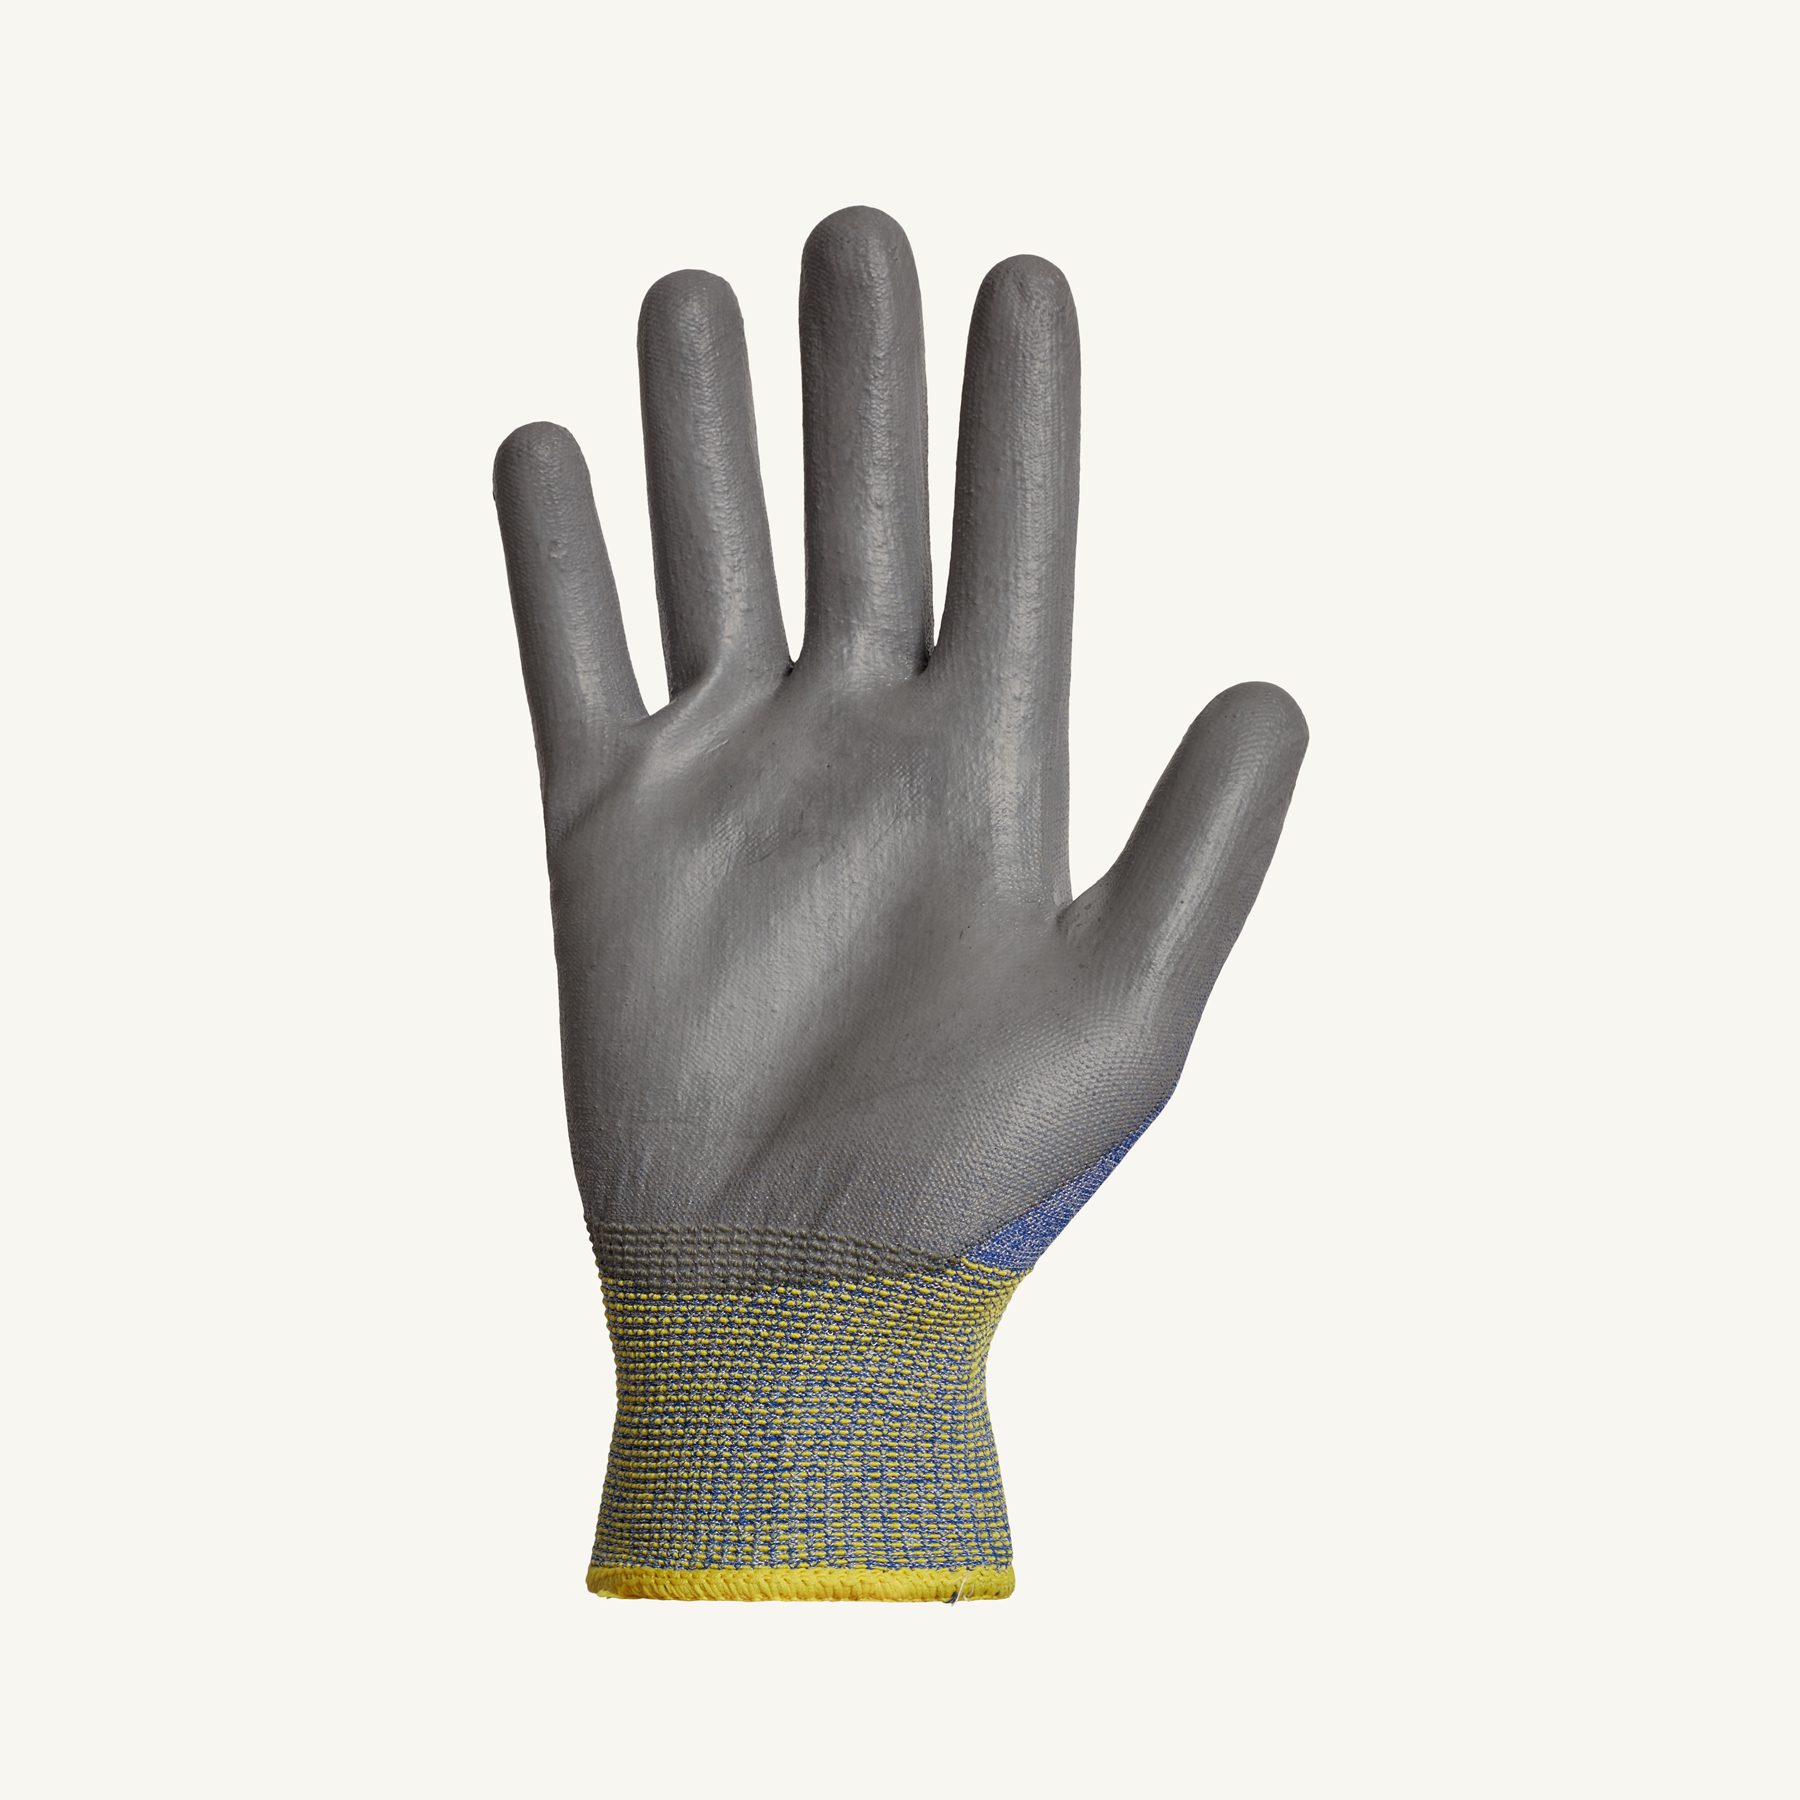 #S15TAFGPU Superior® Glove TenActiv™ Cut-Resistant Gloves w/ Polyurethane Palms